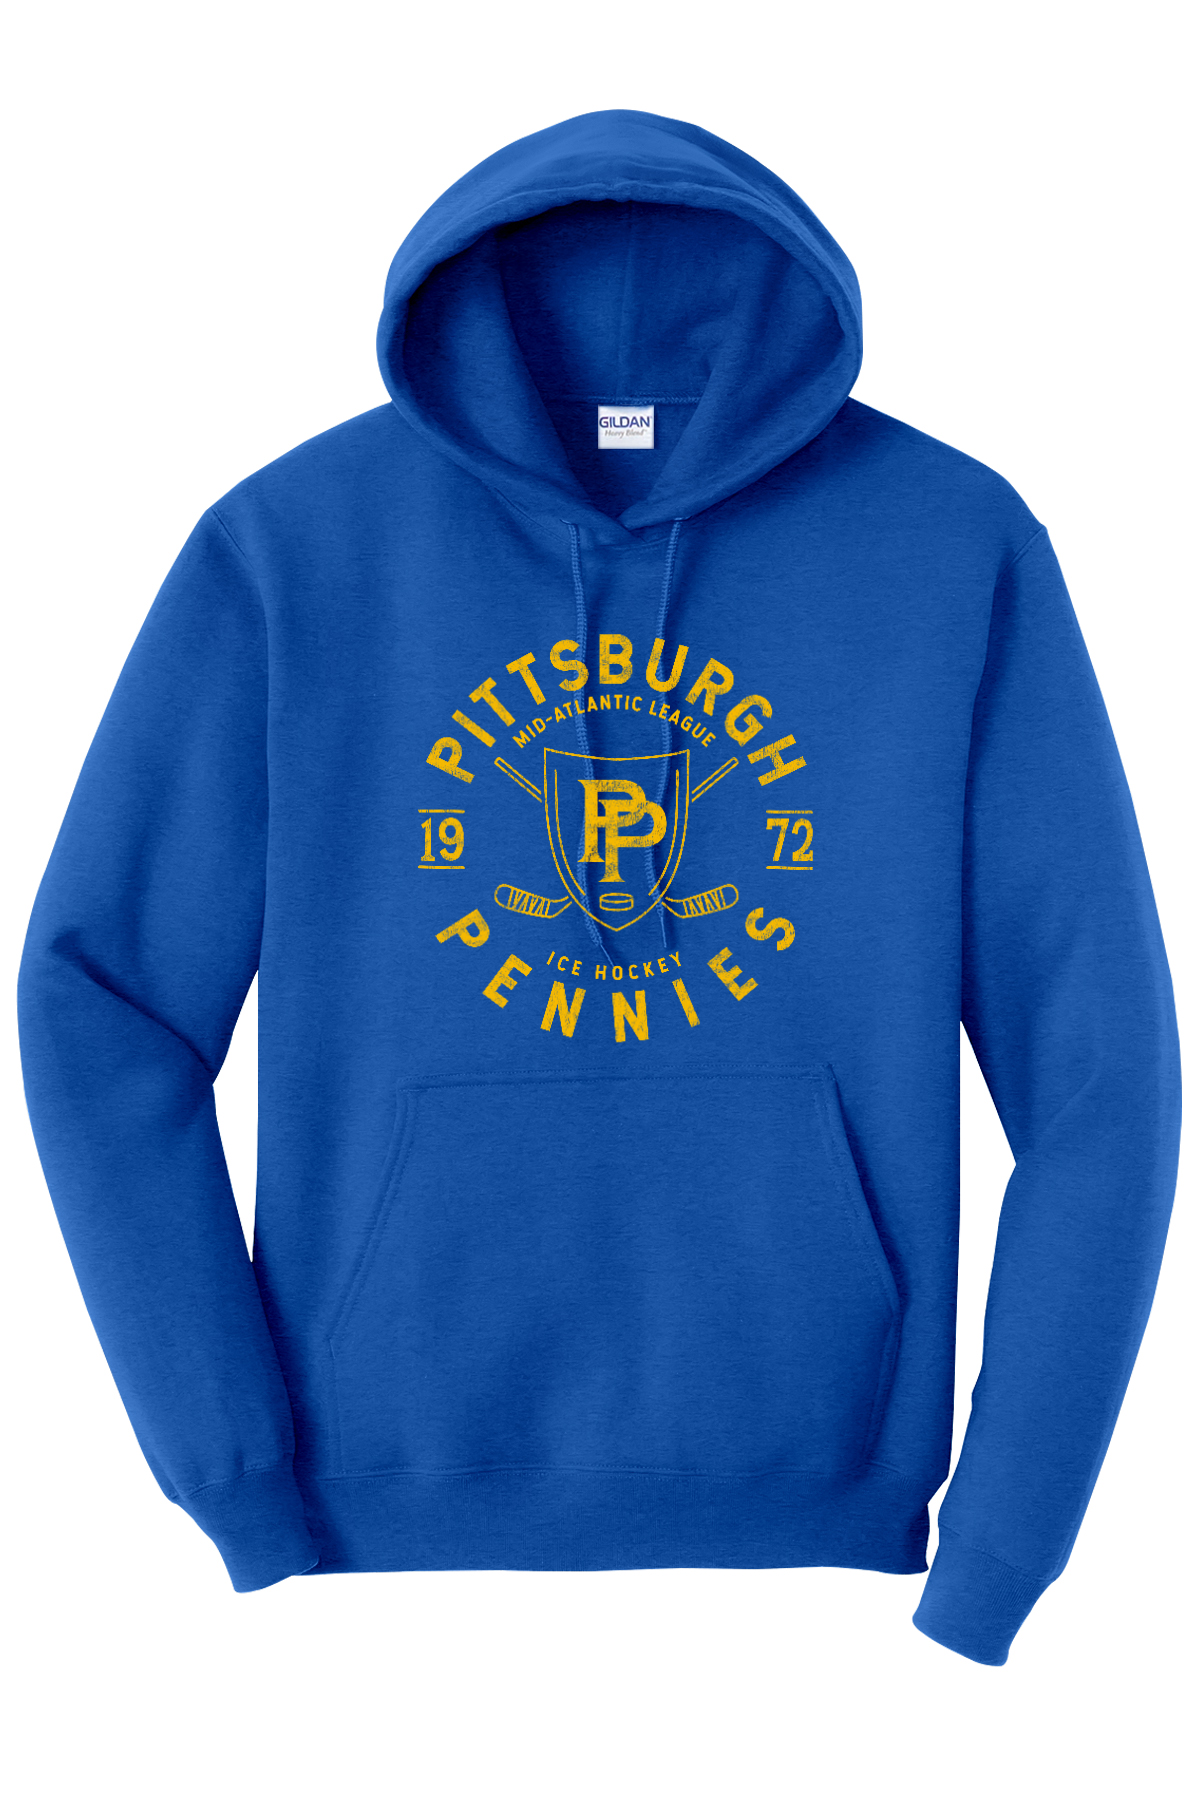 Pittsburgh Pennies - Hoodie - Yinzylvania